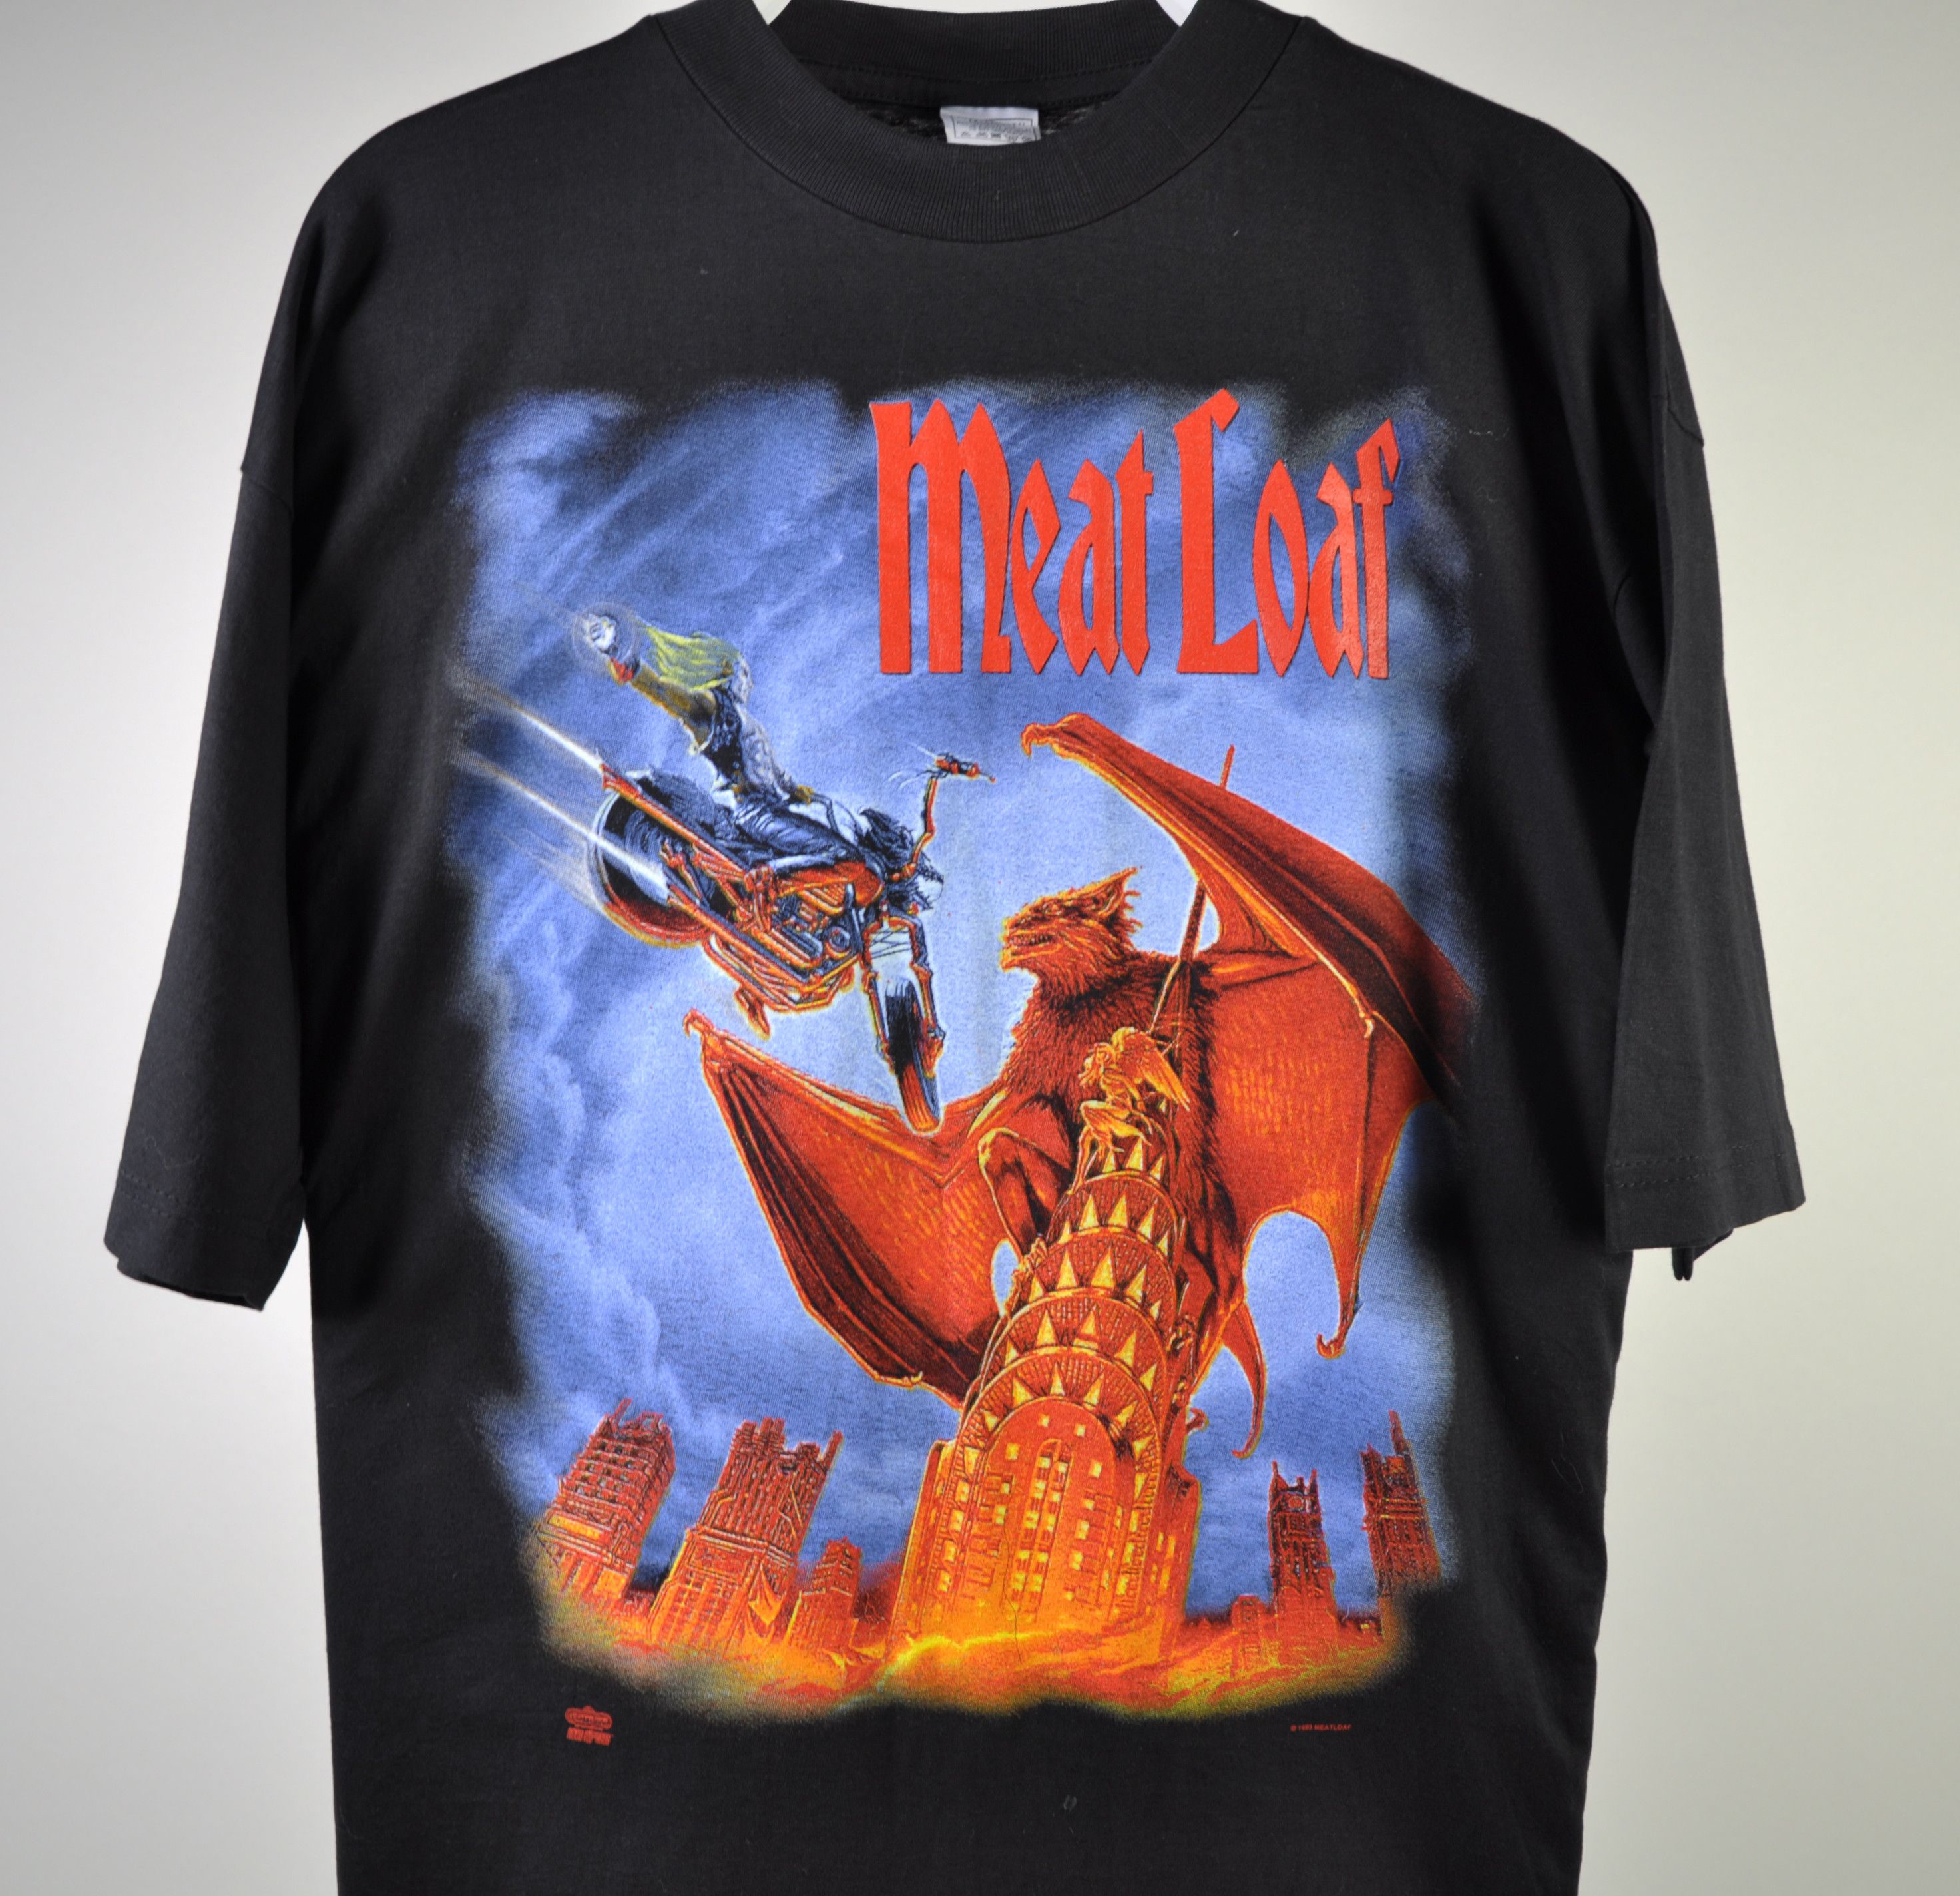 Vintage MEATLOAF 1993 Bat Out Of Hell 2 Tour T Shirt SIZE XL Size US XL / EU 56 / 4 - 2 Preview